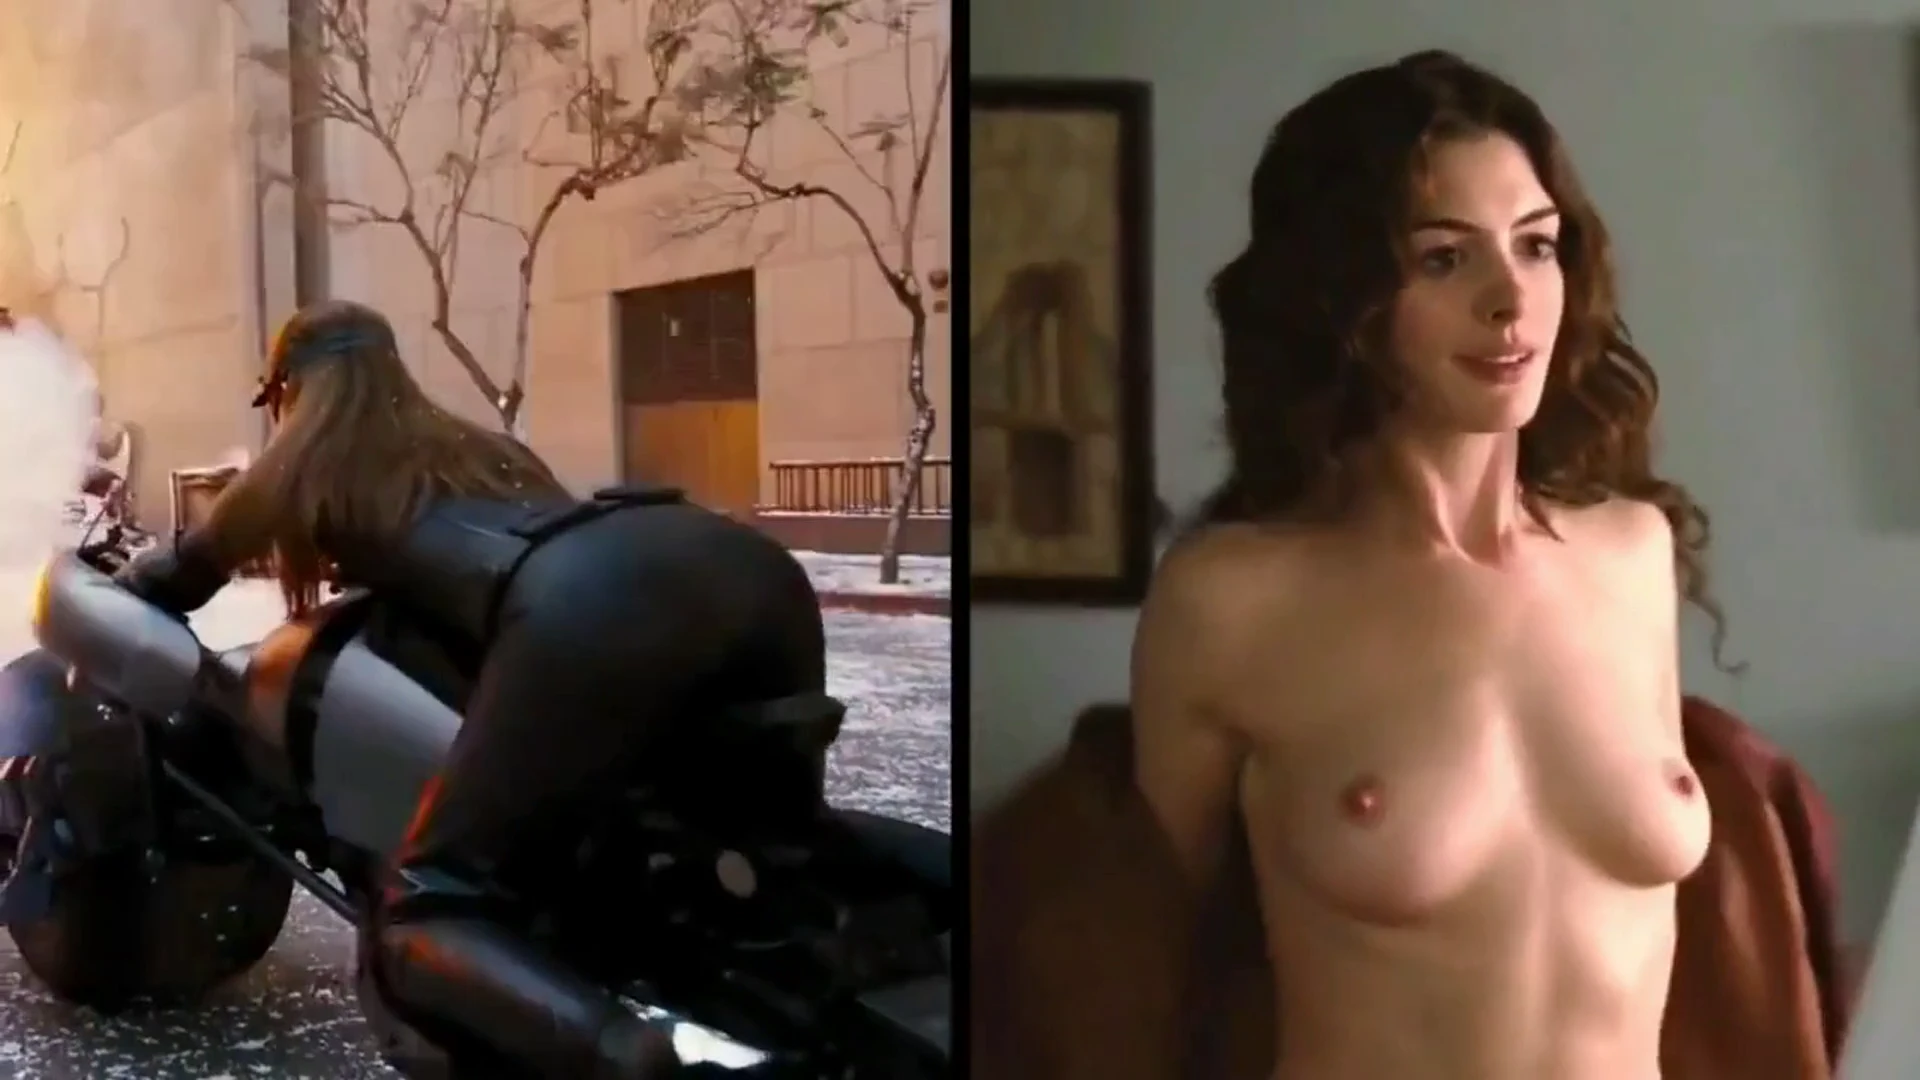 Anne Hathaway (Superhero vs Undressed)